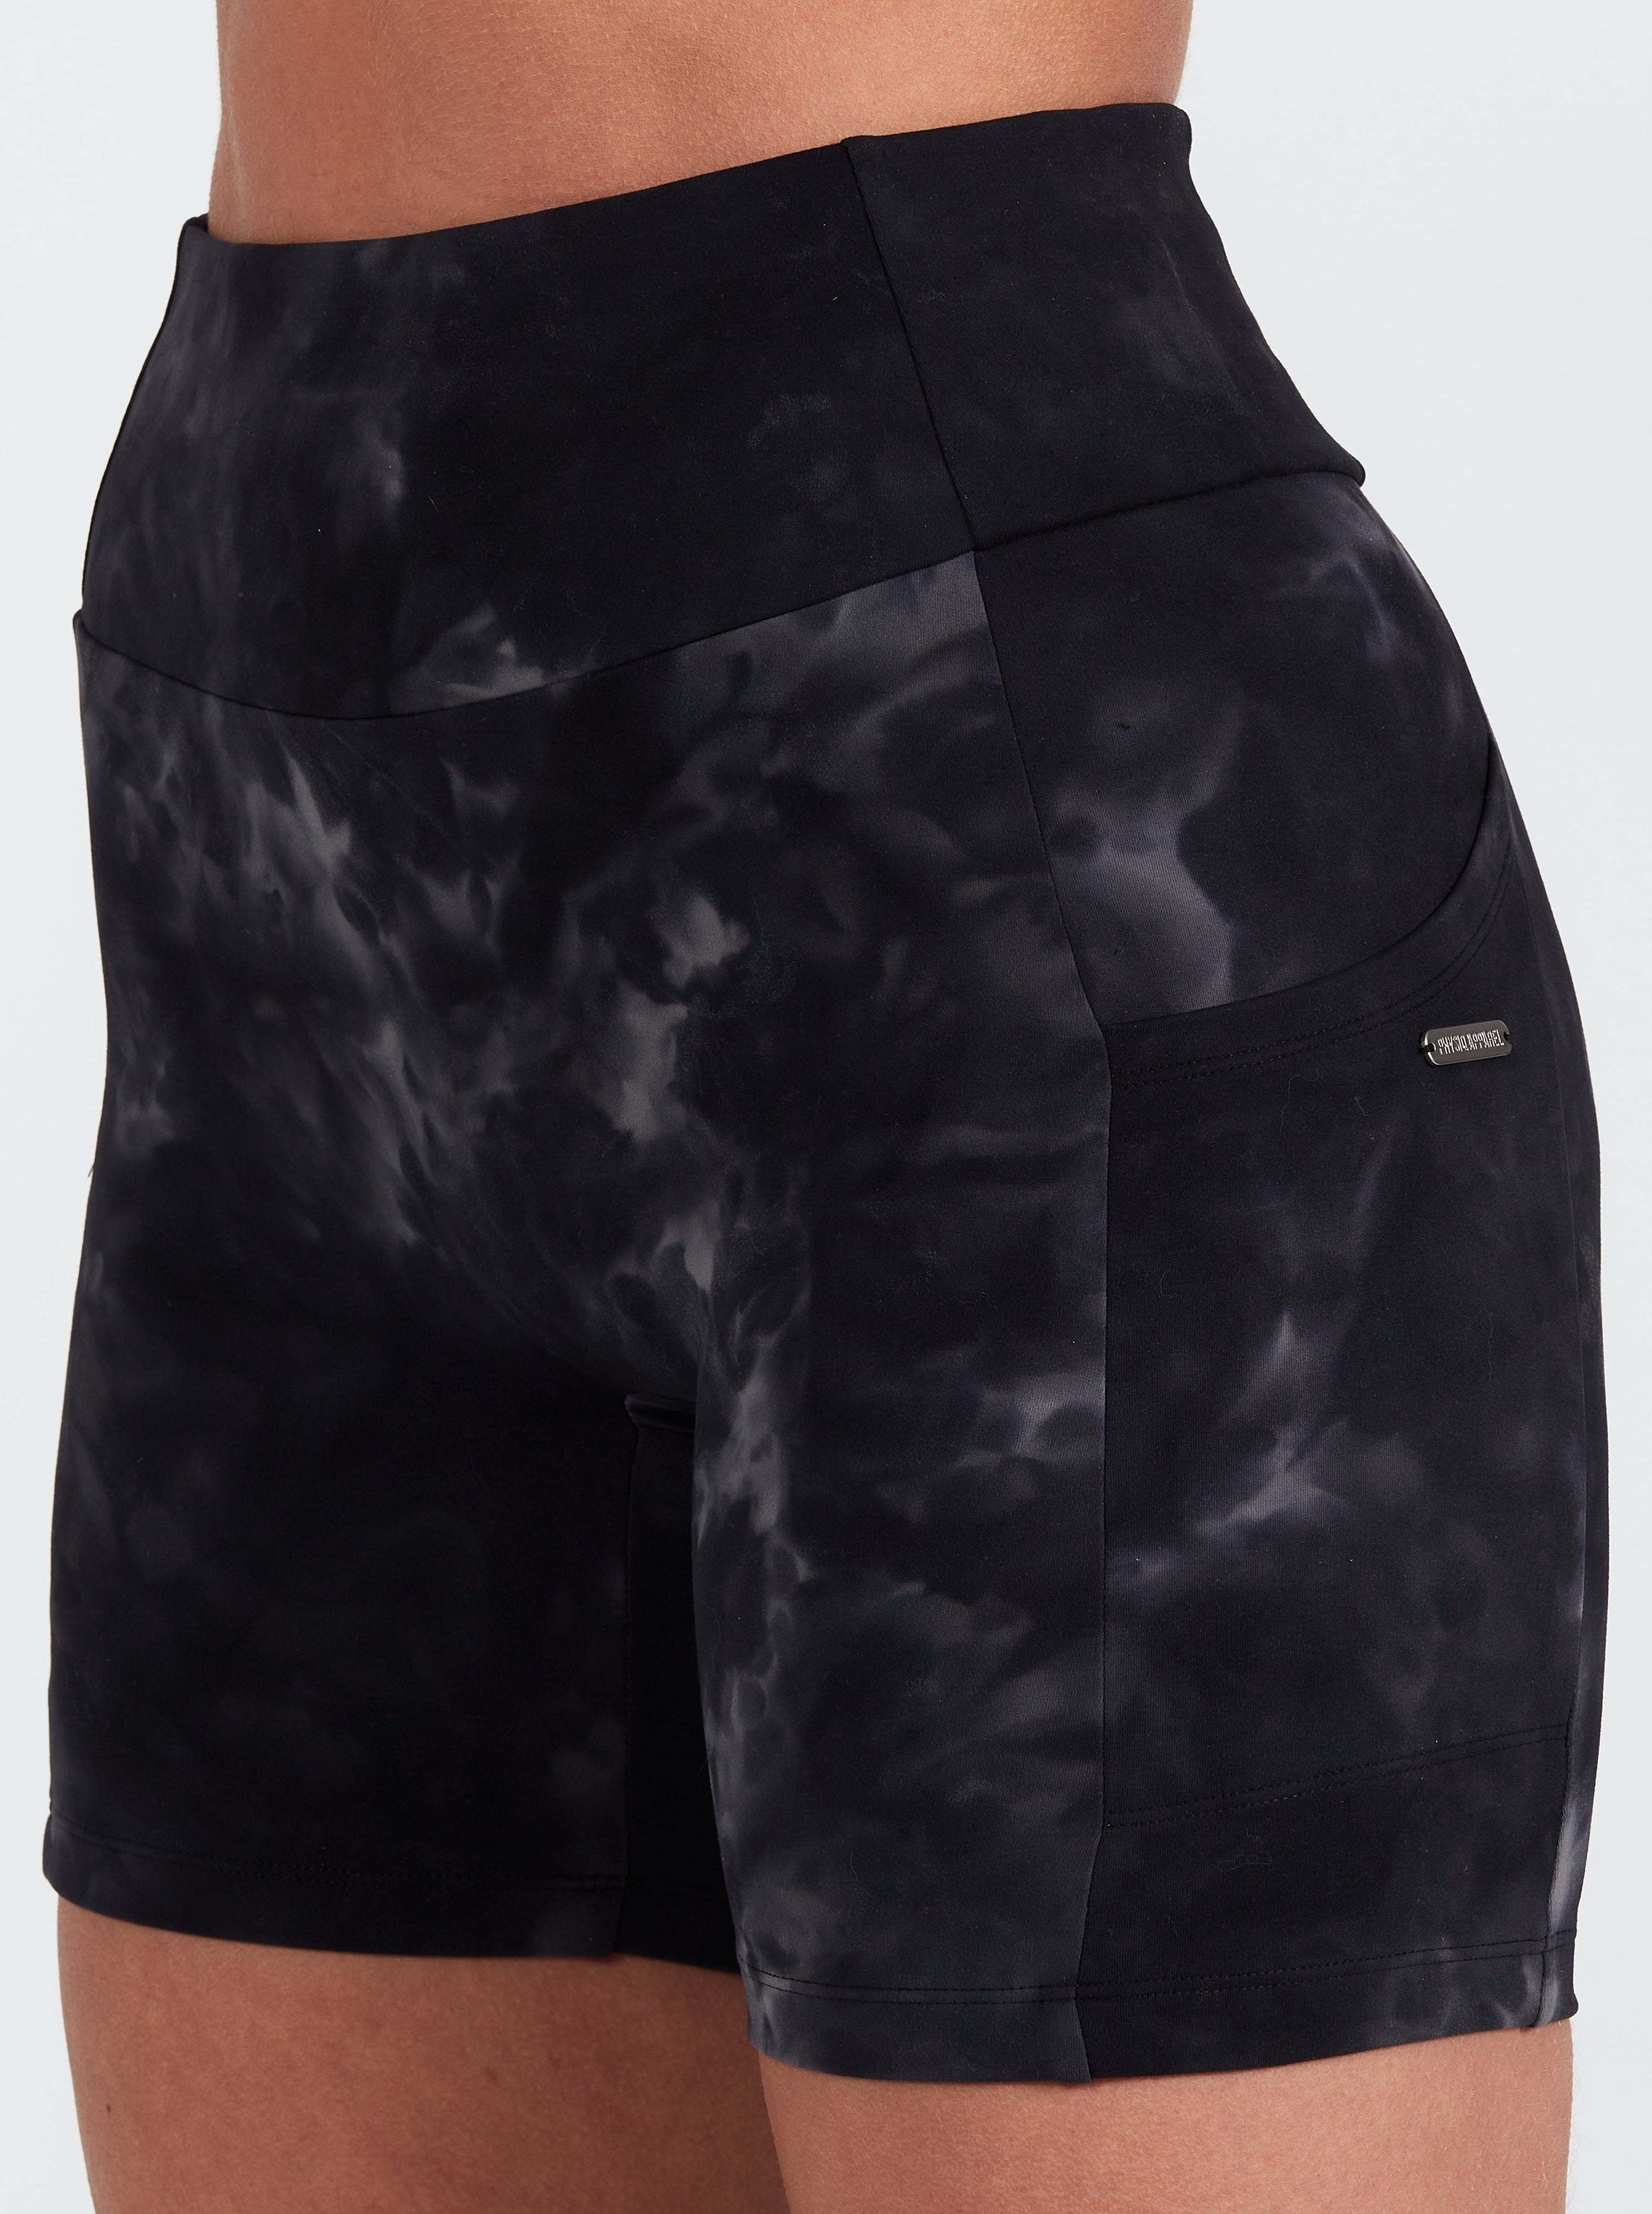 Cosmic Tie Dye Shorts - Midnight Black